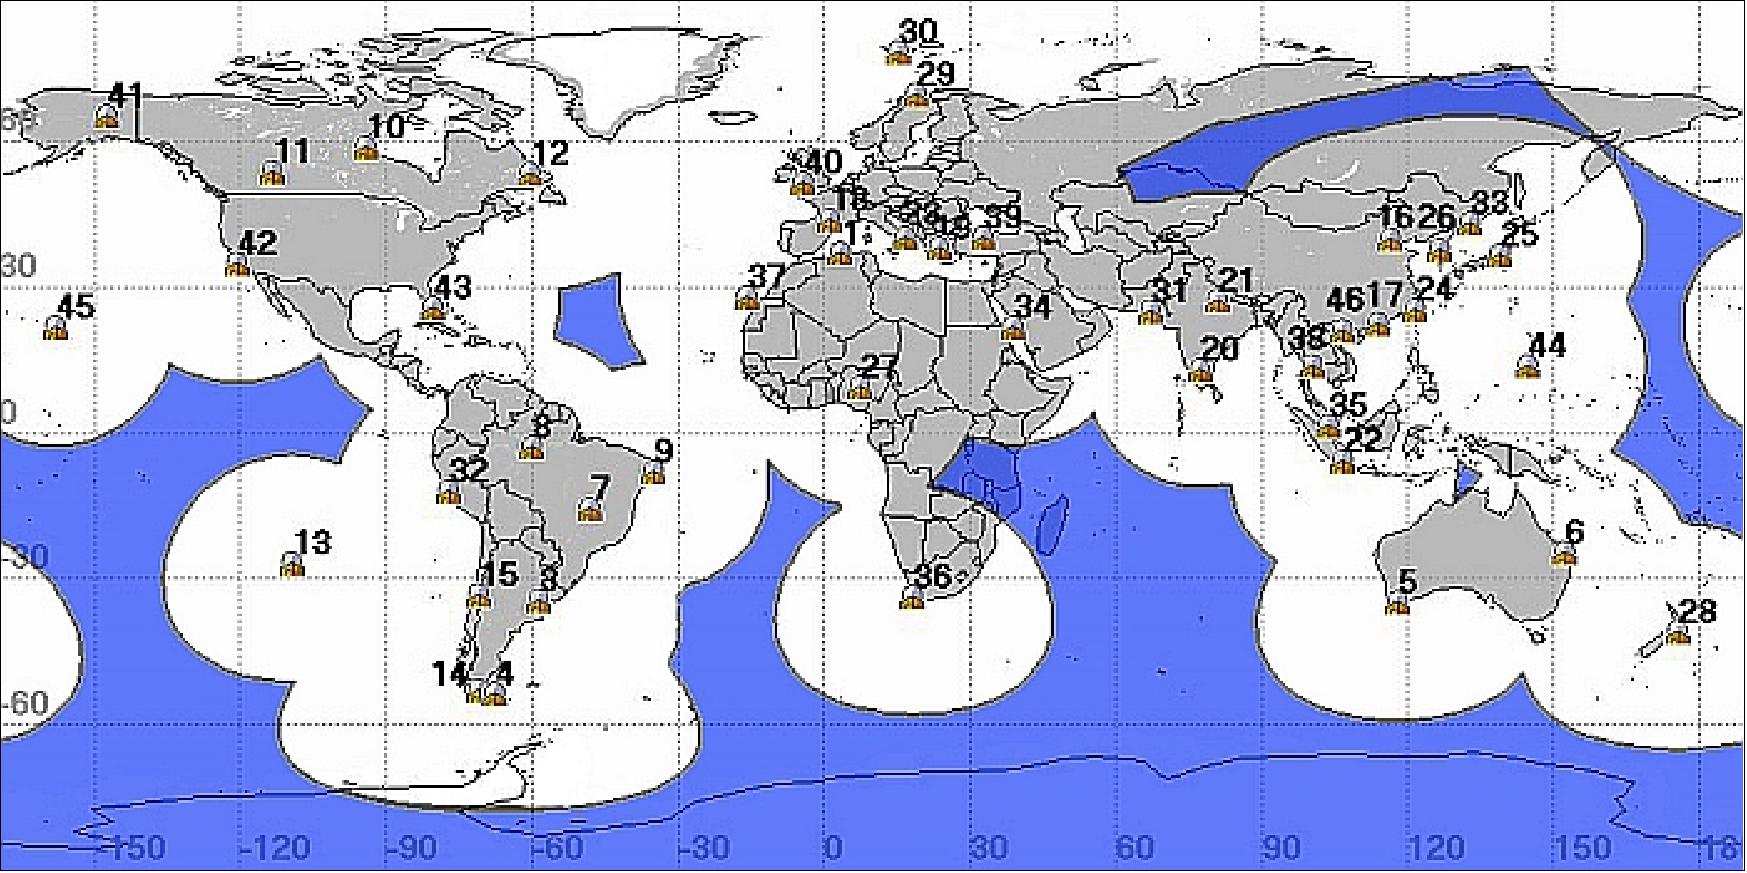 Figure 21: Locations of COSPAS-SARSAT LEOLUTs (April 2010), image credit: COSPAS-SARSAT